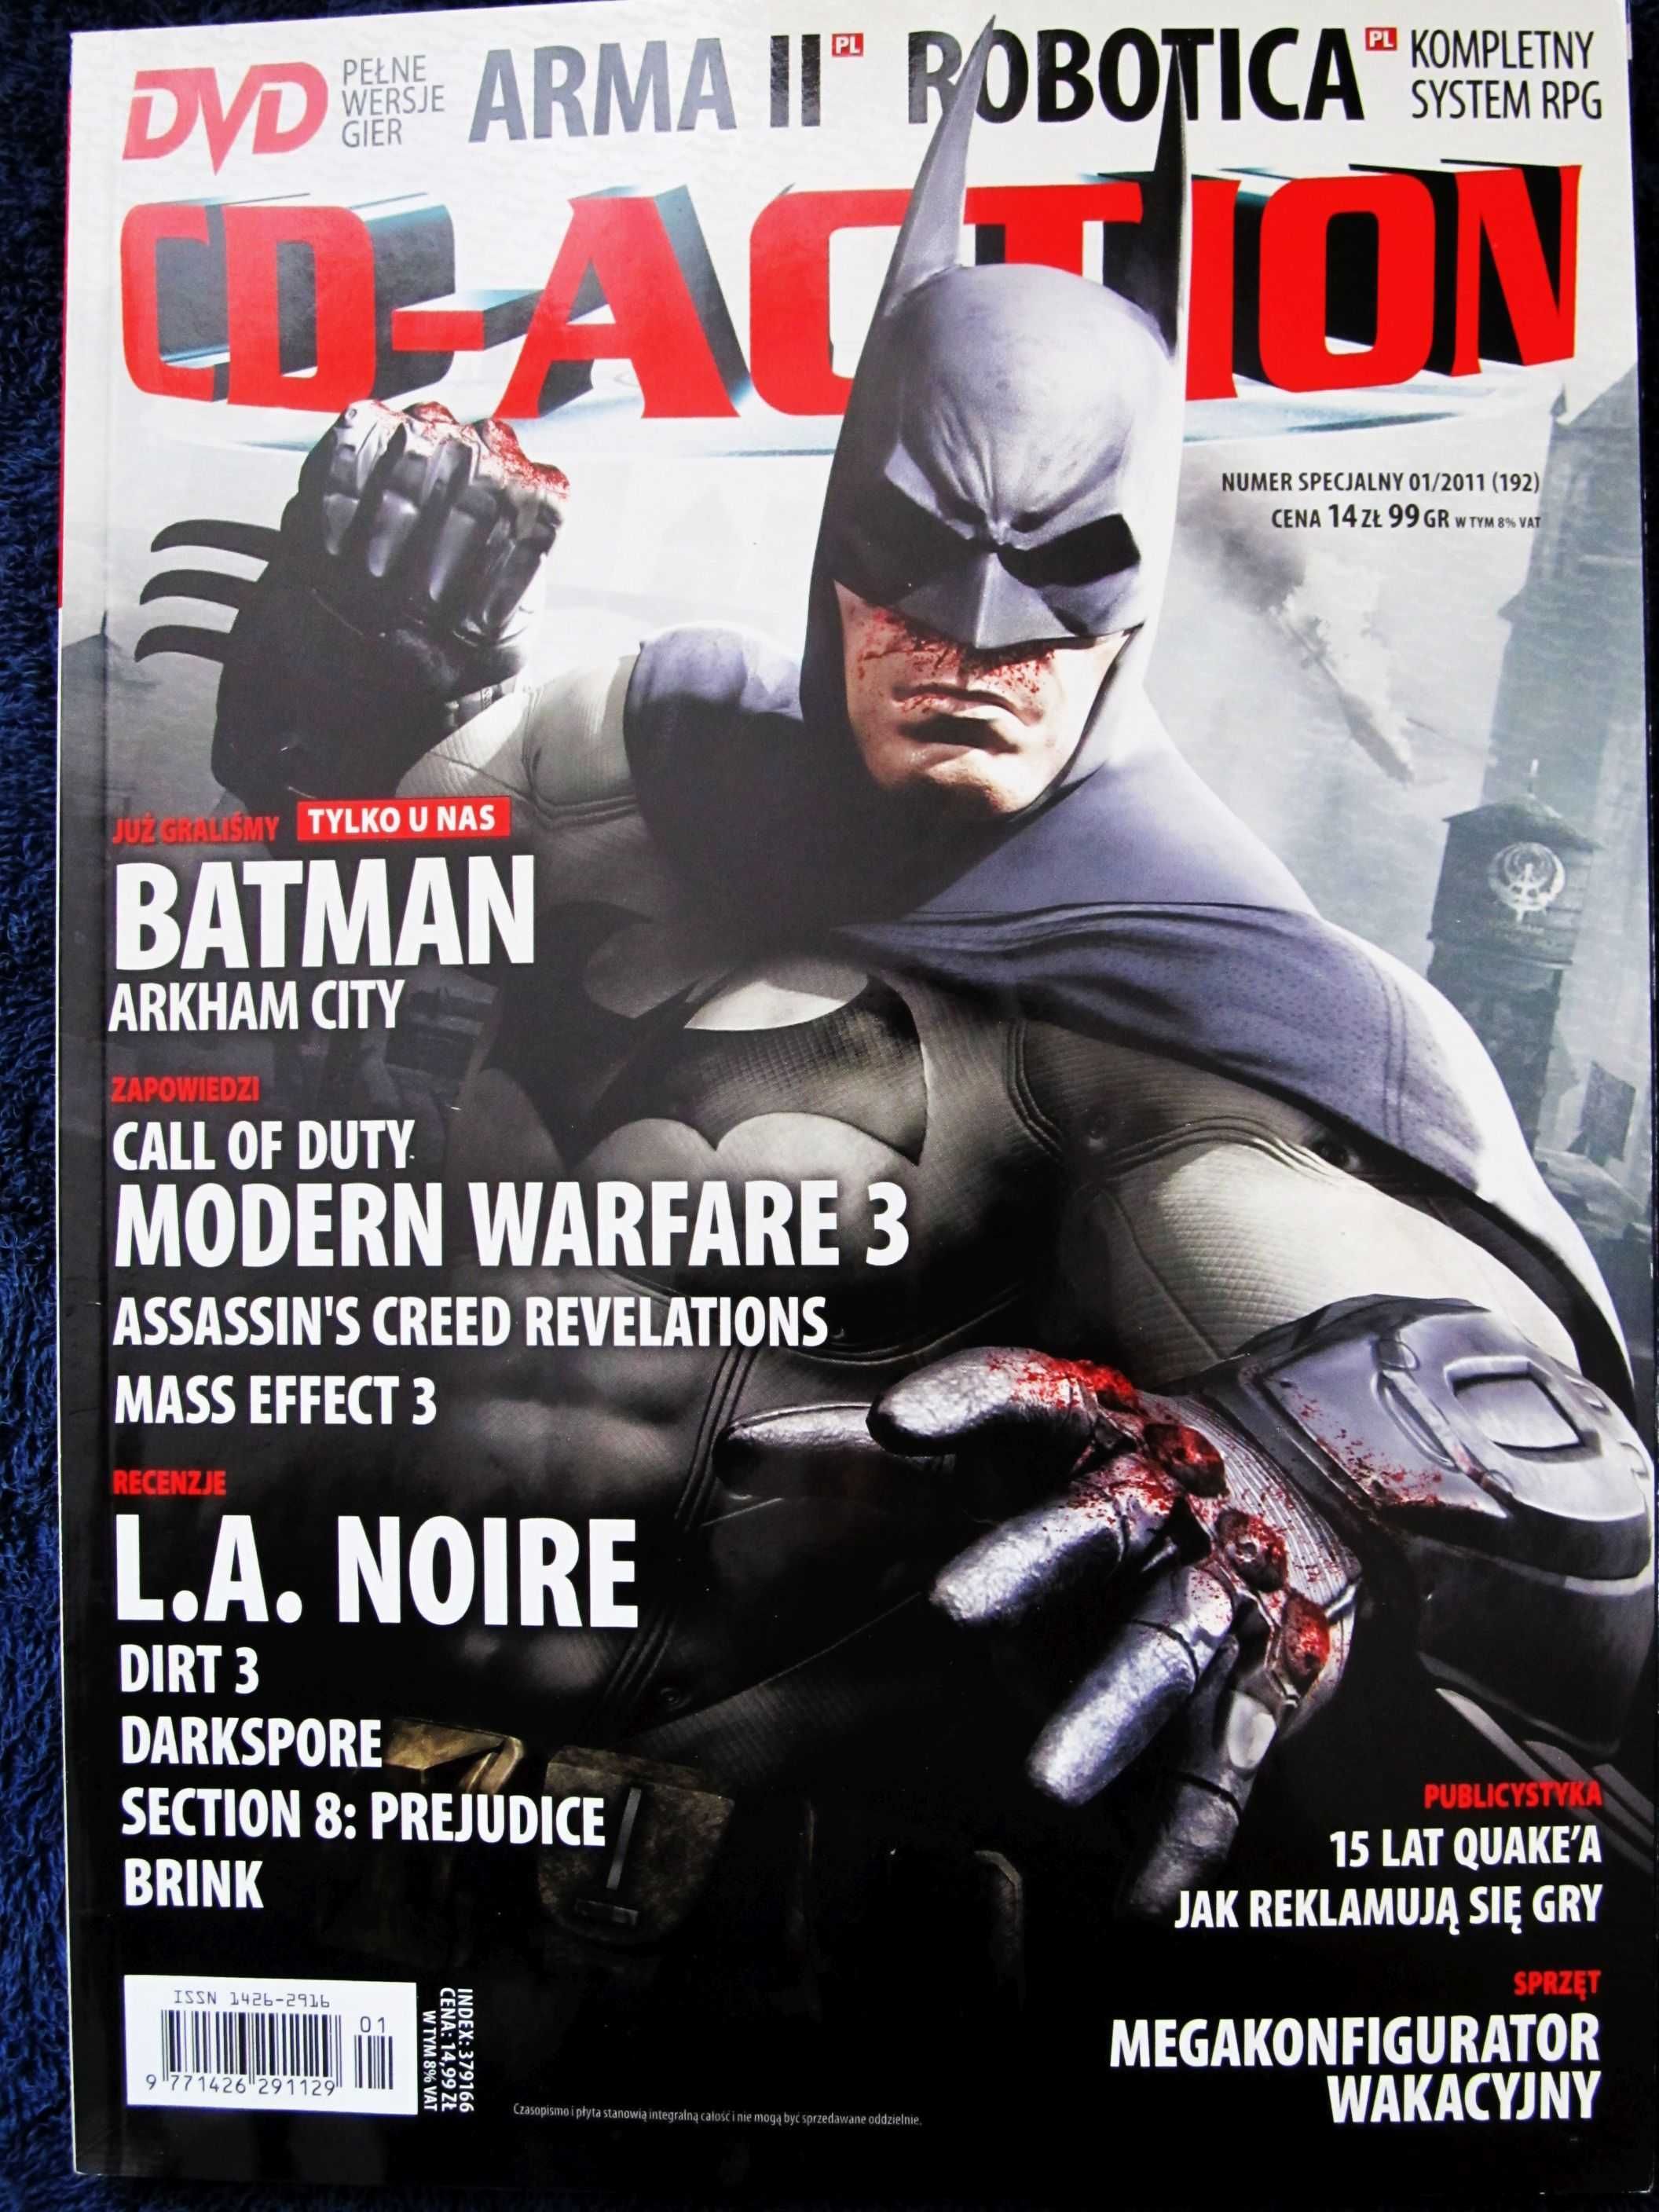 CD - Action 1/2011 Batman,Call of Duty,Mass Effect3,L.A.Noire,Quake